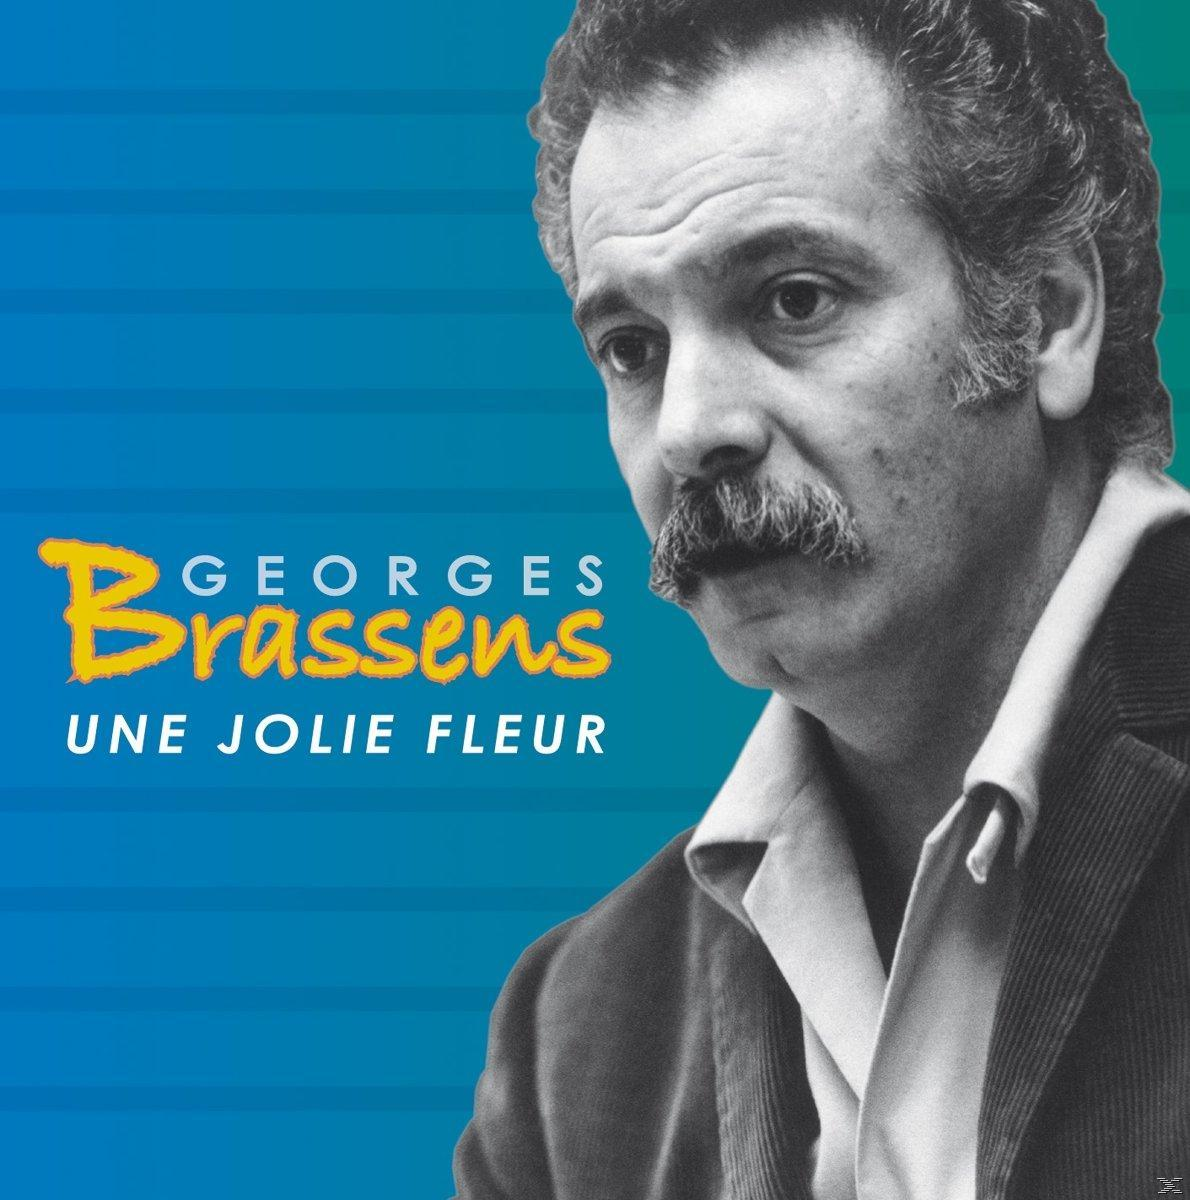 Georges Brassens (CD) - Une Fleur - Jolie